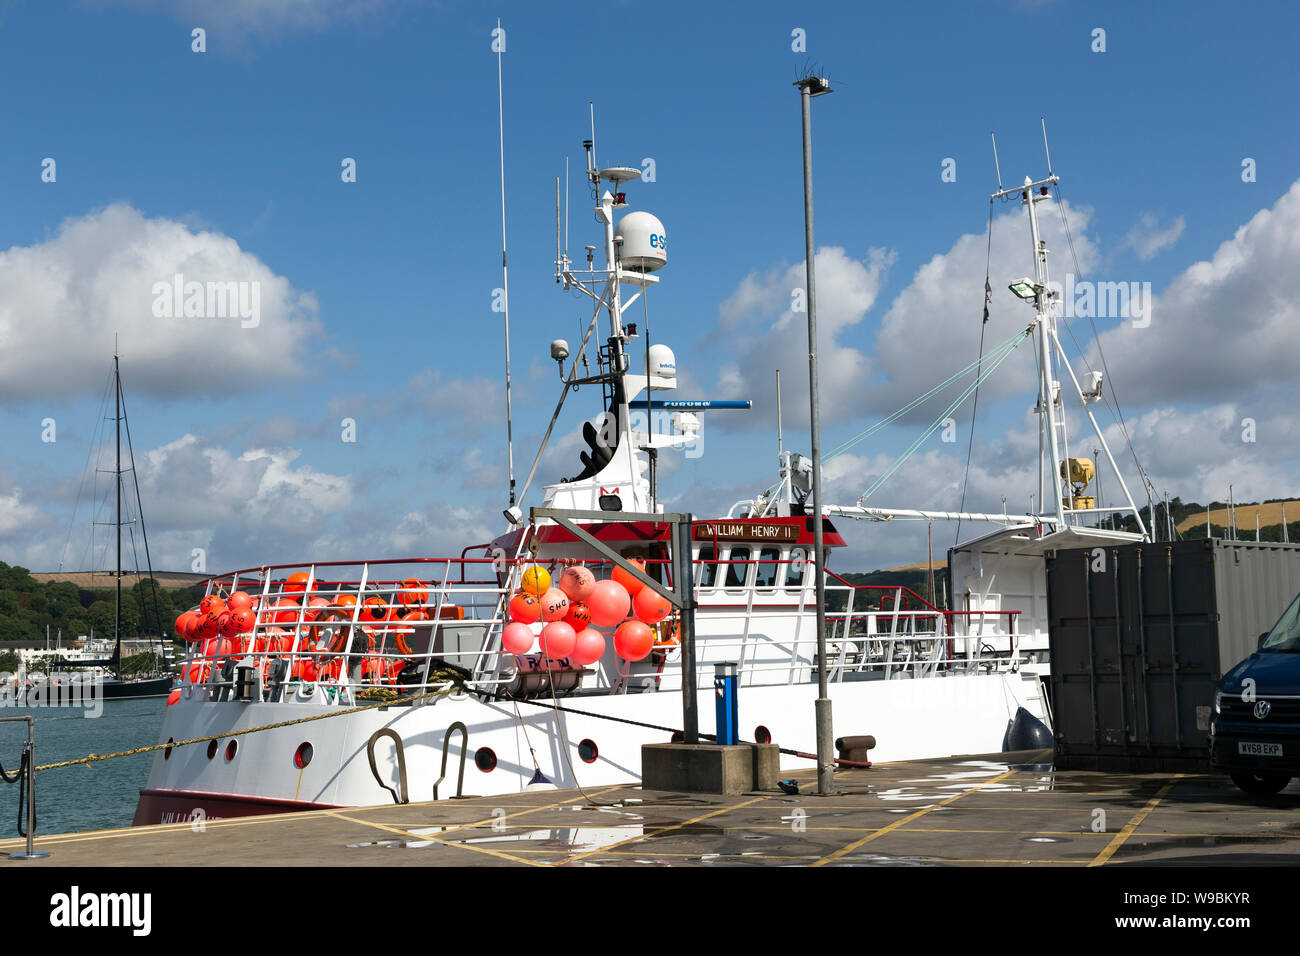 MFV WILLIAM HENRY II is a Fishing vessel built in 1989 by SCHEEPSWERF FRIESLAND - LEMMER, NETHERLANDS. Stock Photo